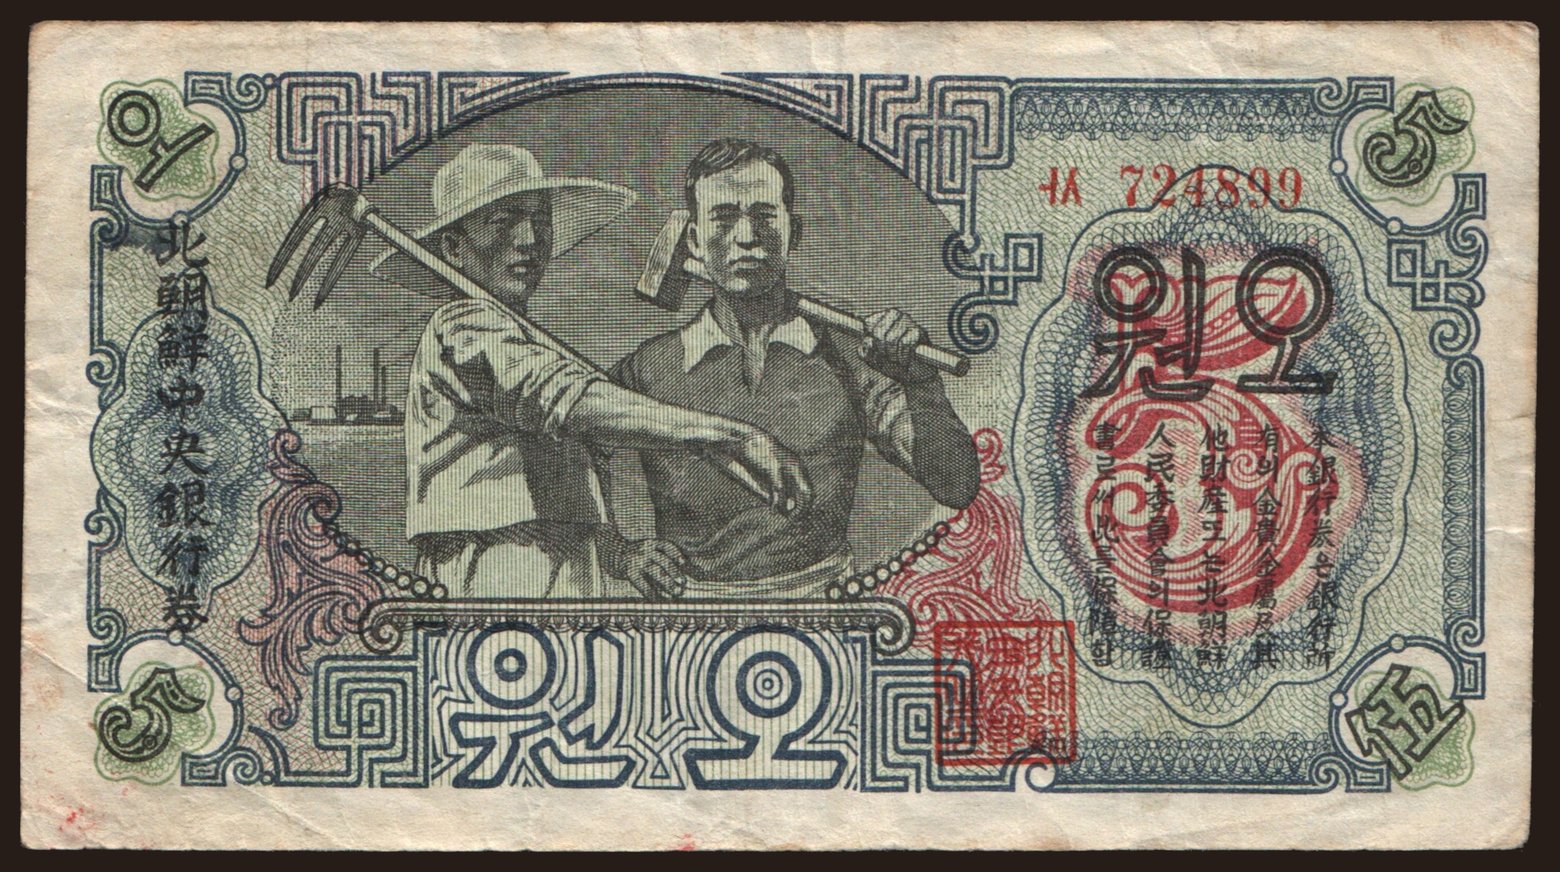 5 won, 1947